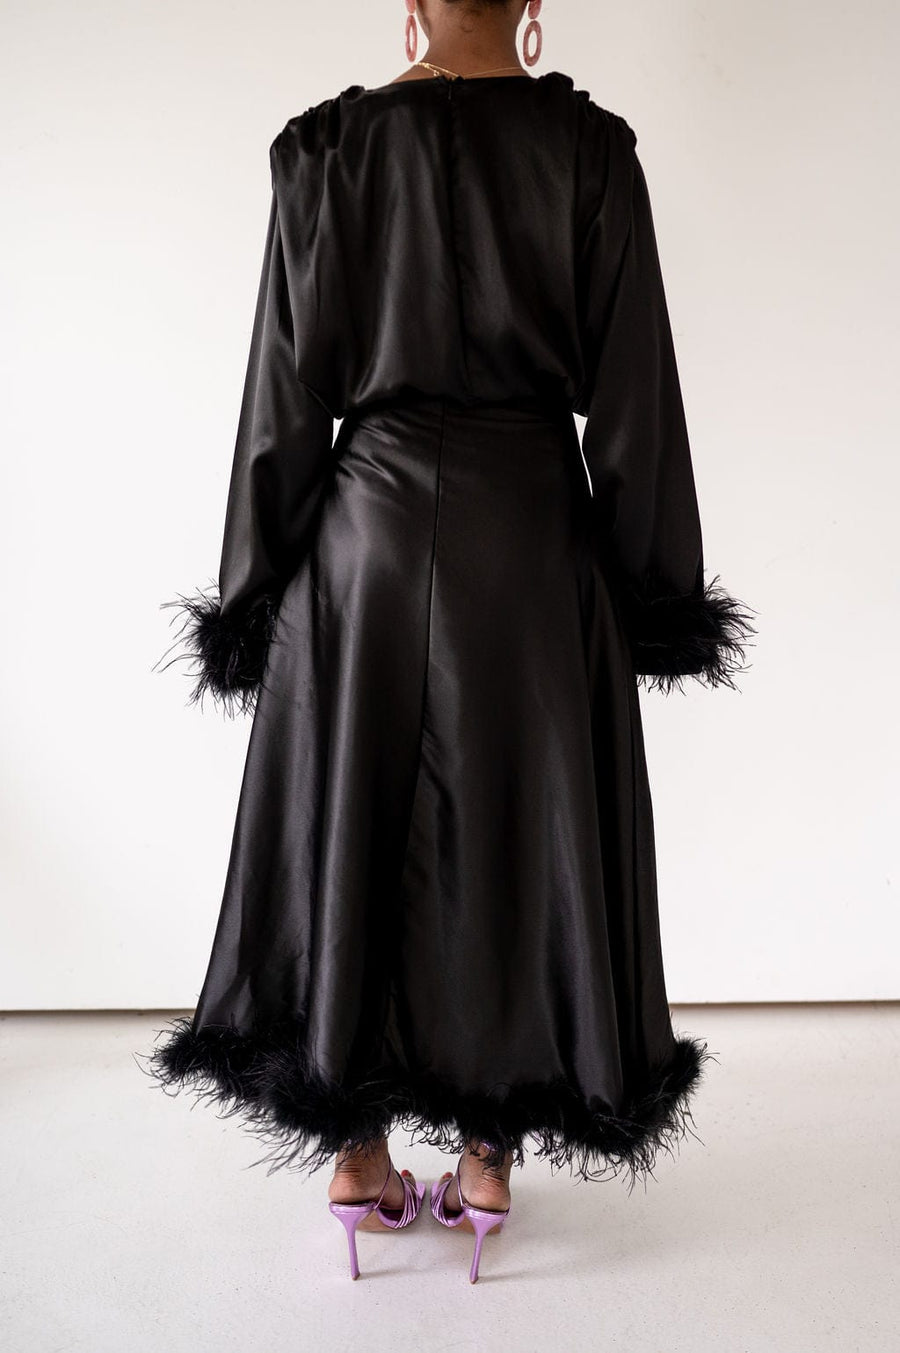 Zaina Feather Sleeve Draped Bodysuit- Black